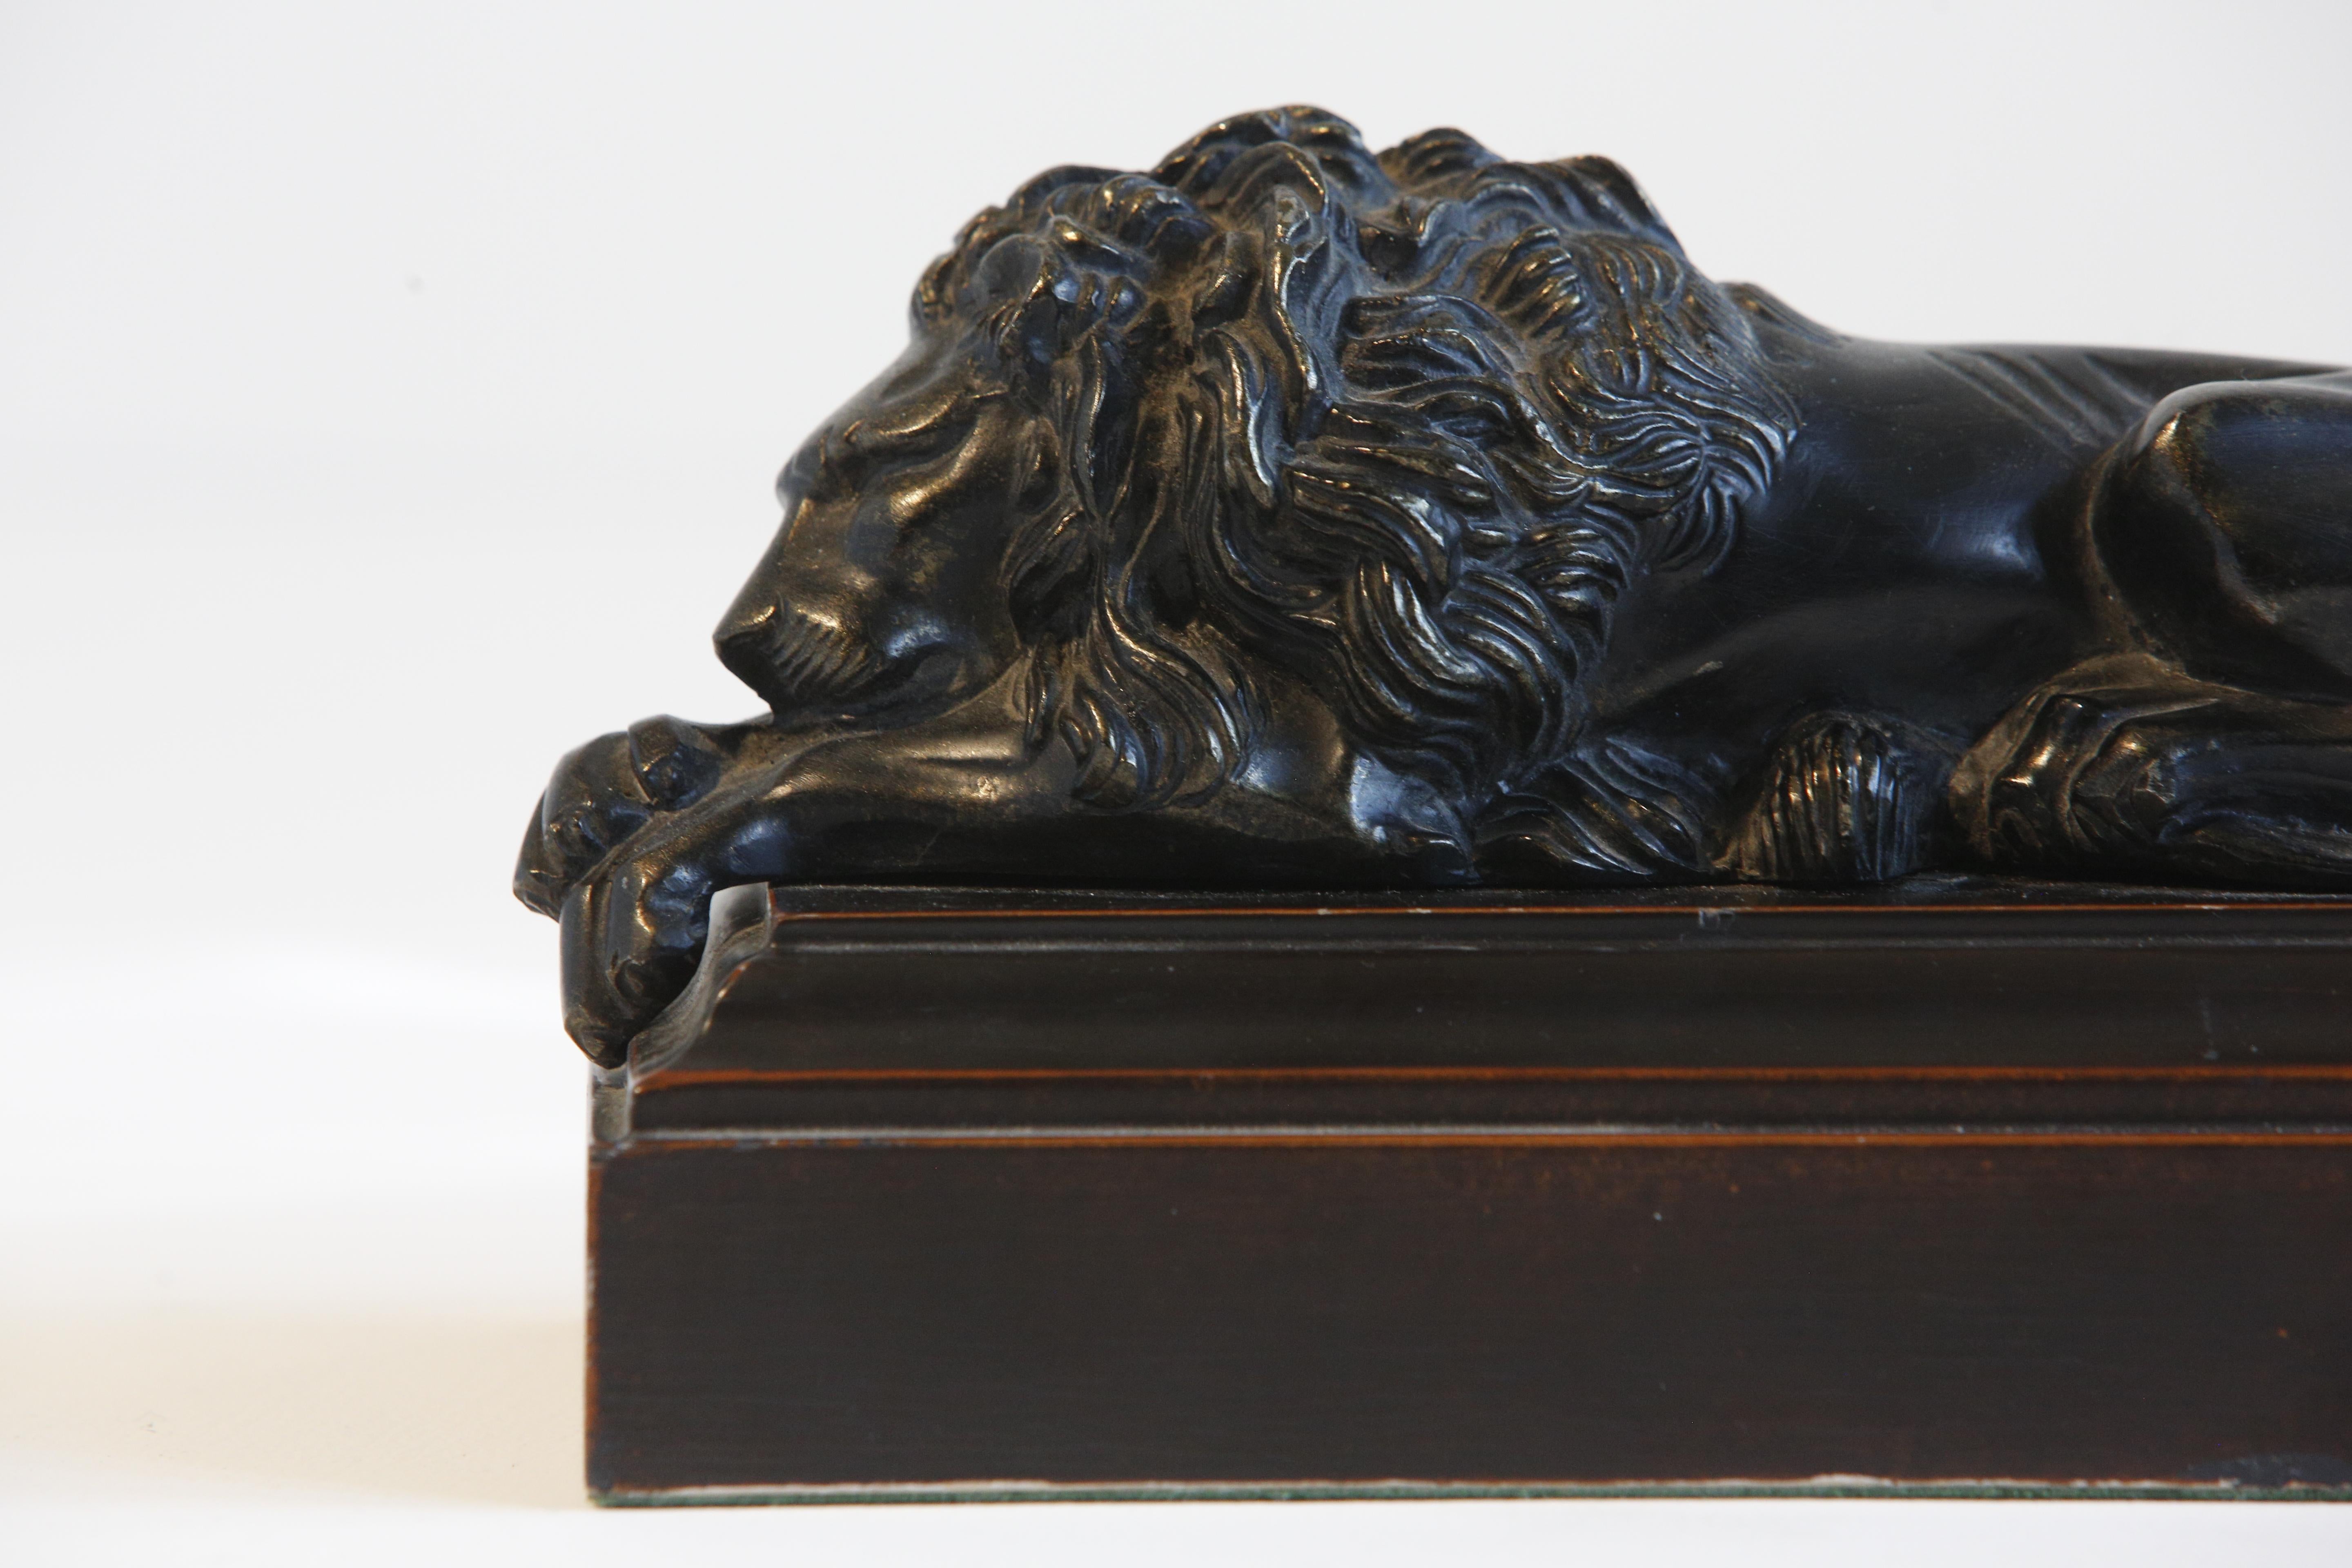 Pair of Cast Sculptures Bronze Lions, after Antonio Canova, 19th Century For Sale 1